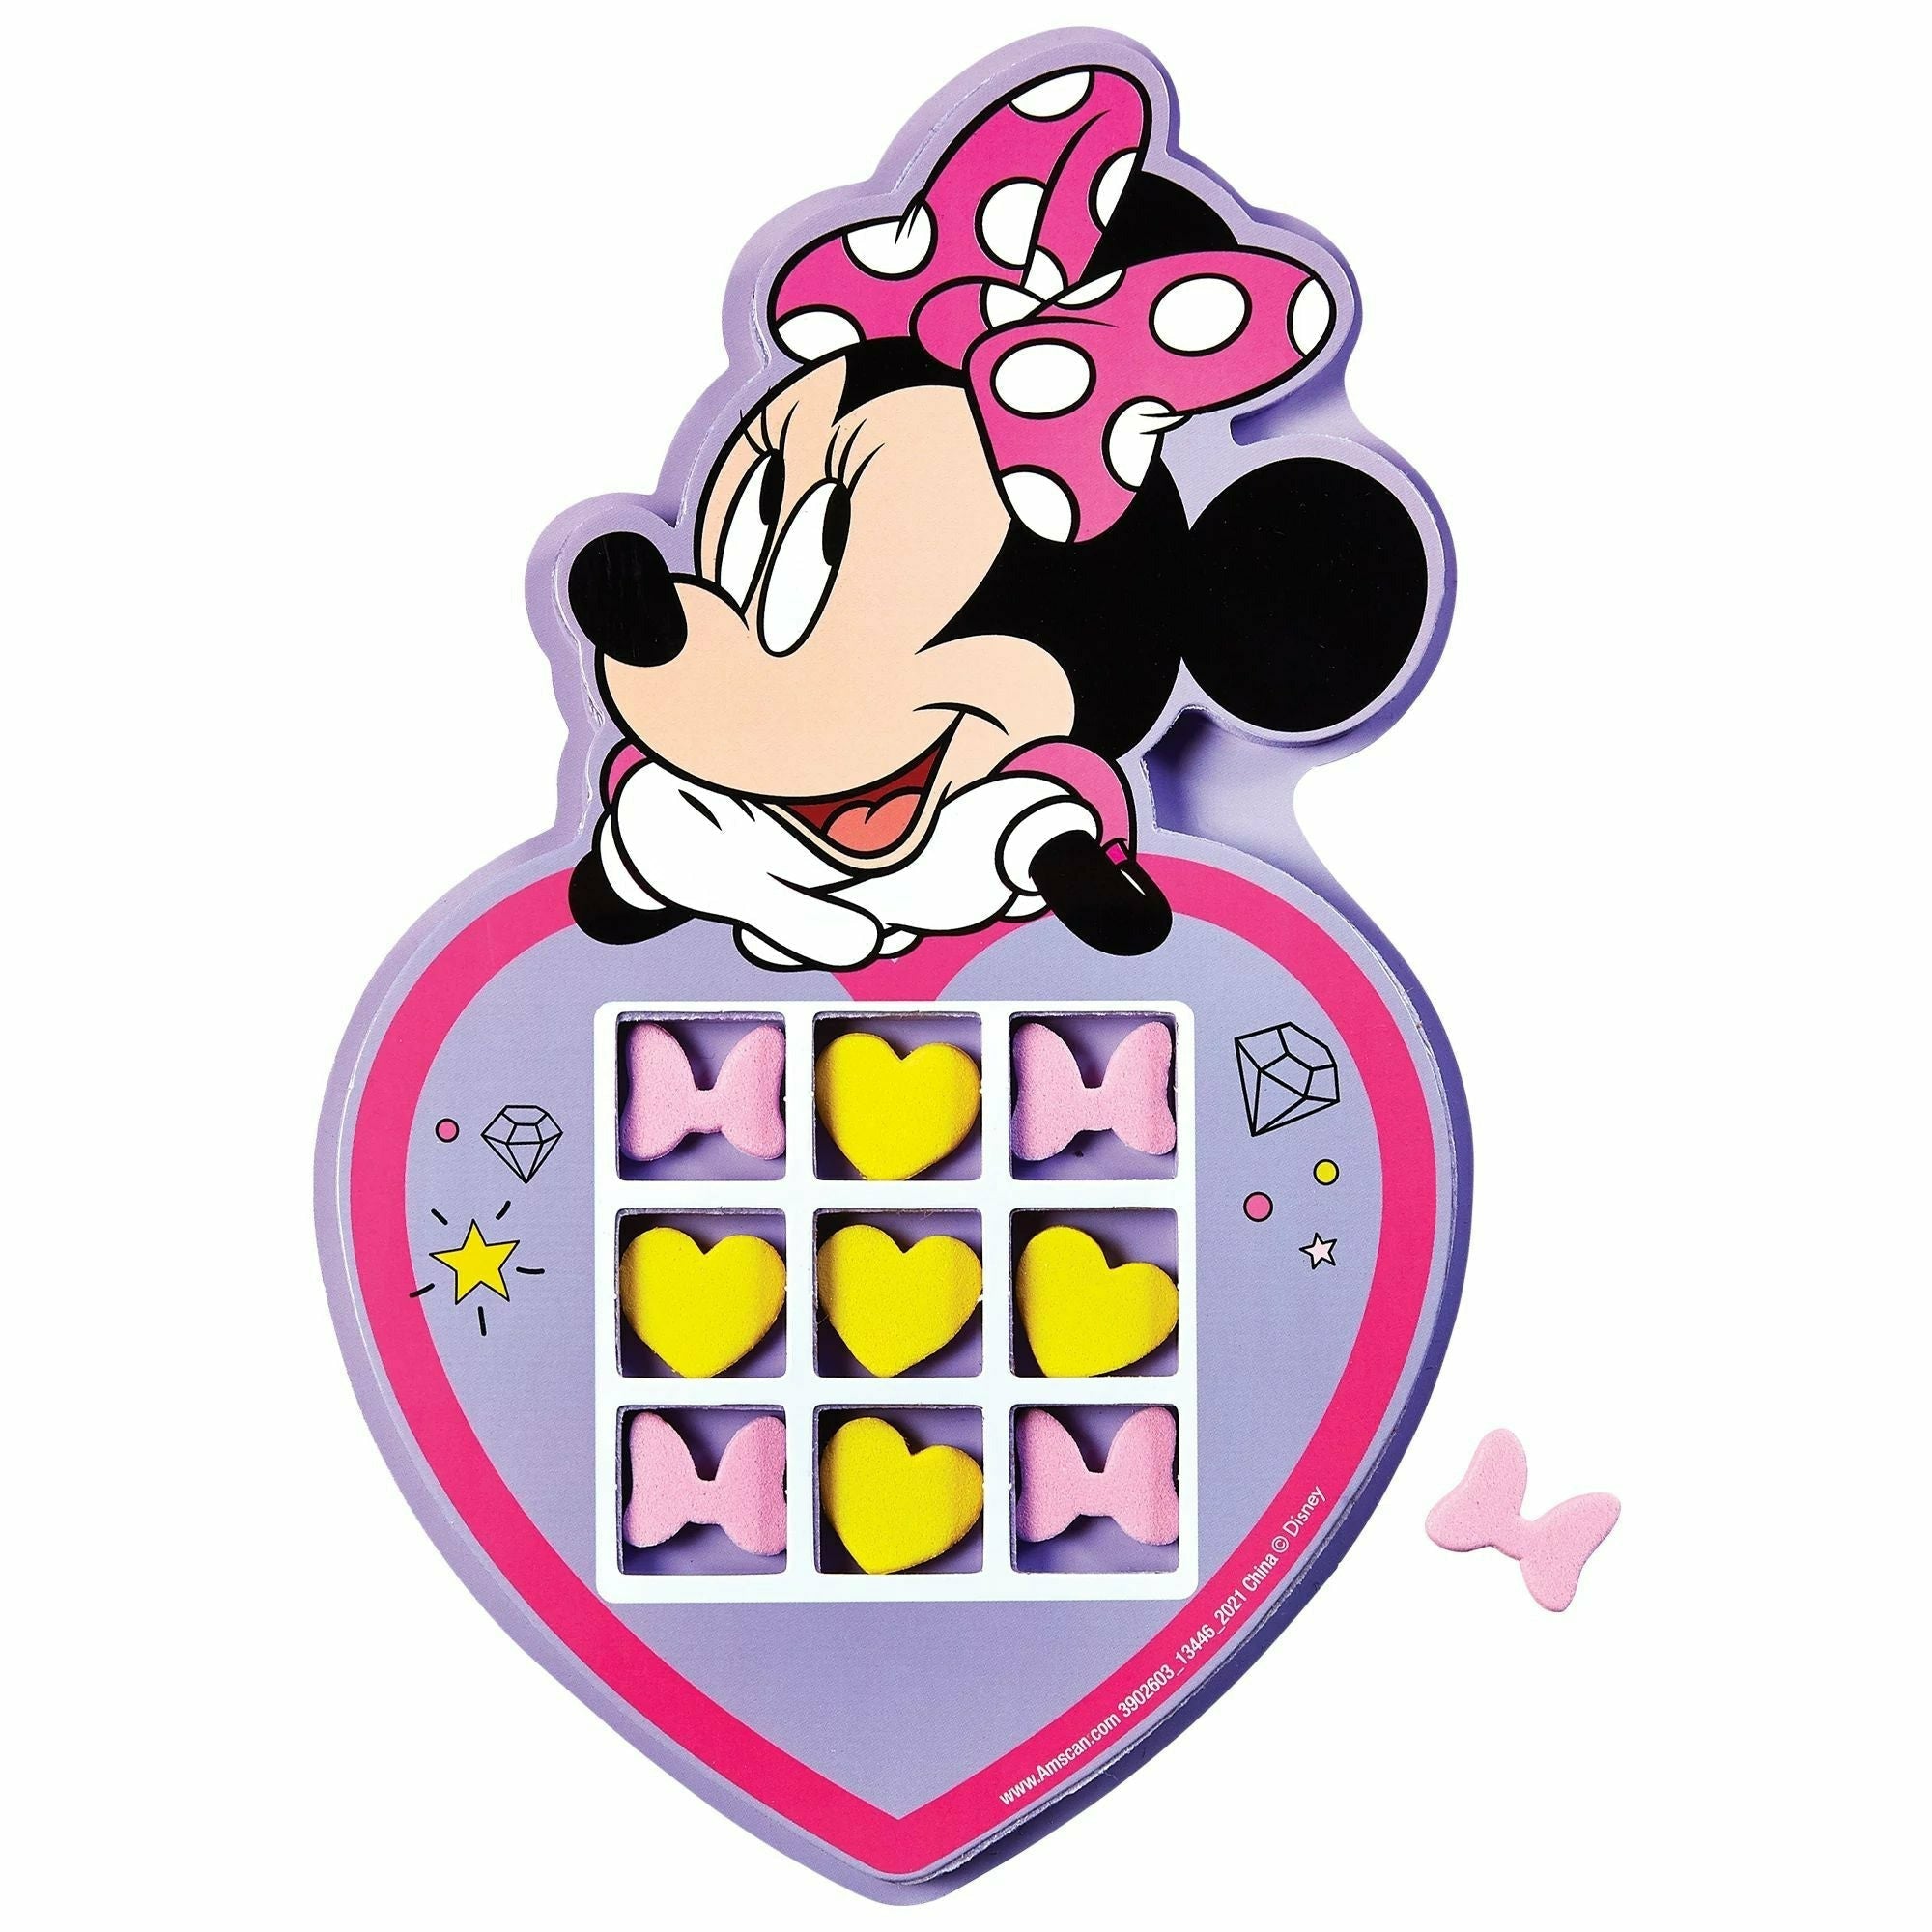 Amscan BIRTHDAY: JUVENILE Disney Minnie Mouse Shaped Foam Game